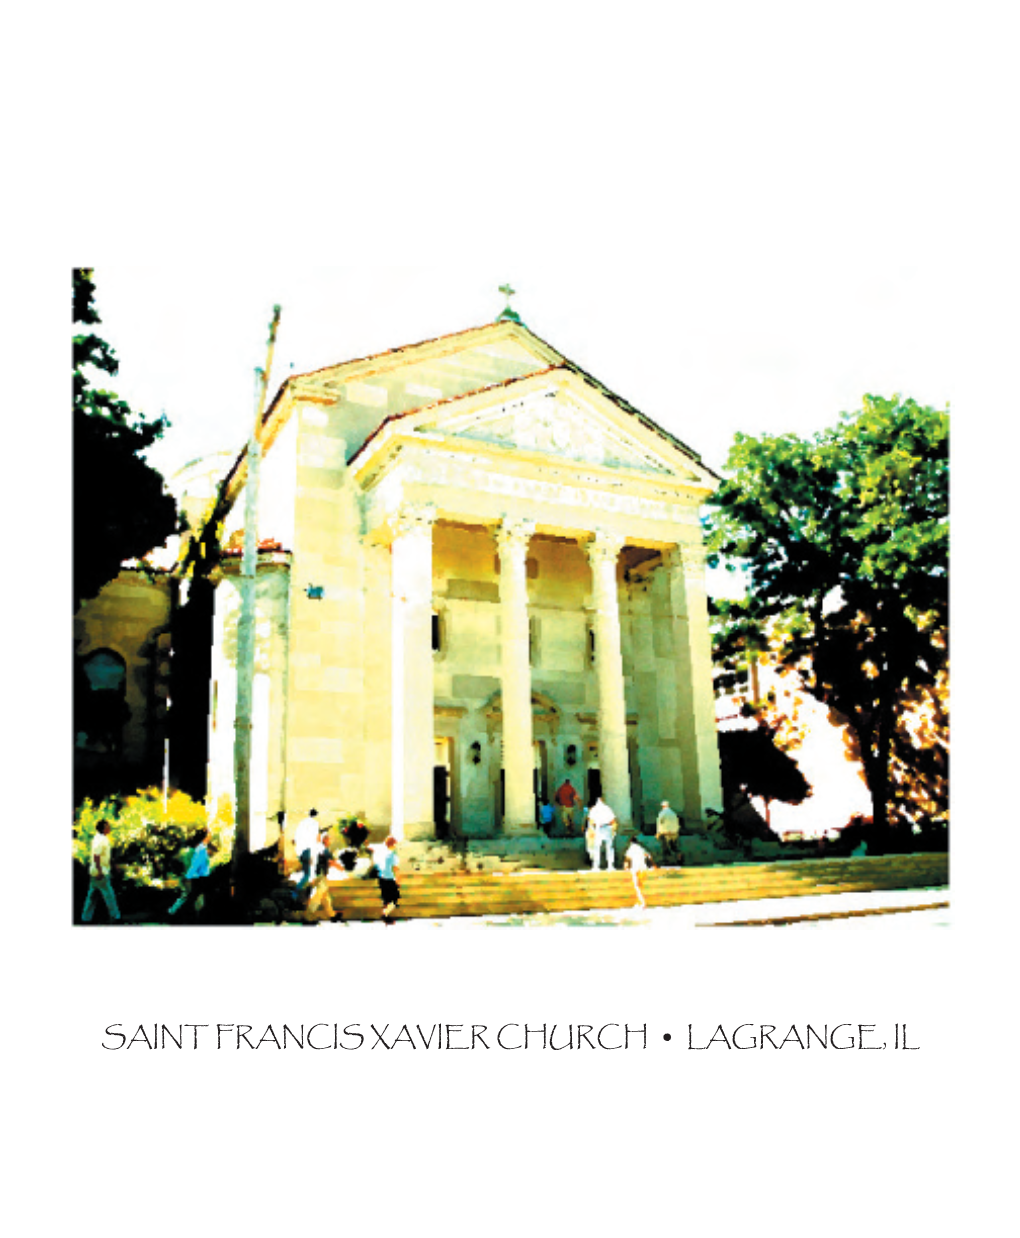 SAINT FRANCIS XAVIER CHURCH • LAGRANGE, IL SAINT FRANCIS XAVIER CHURCH • LAGRANGE, IL Welcome to St